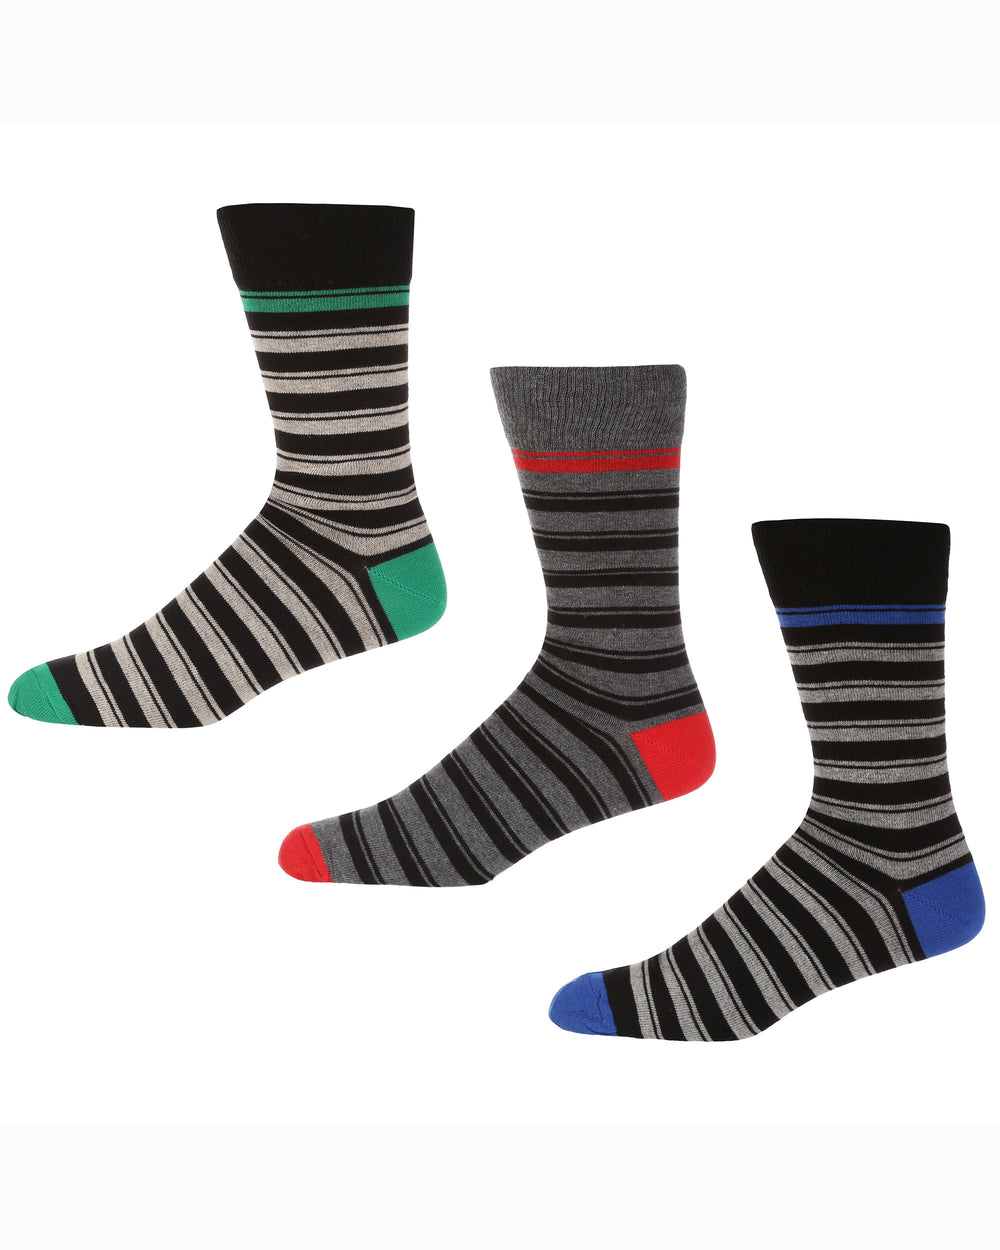 Wings of Eagles Men's 3-Pack Socks - Black/Grey/Cream Stripe